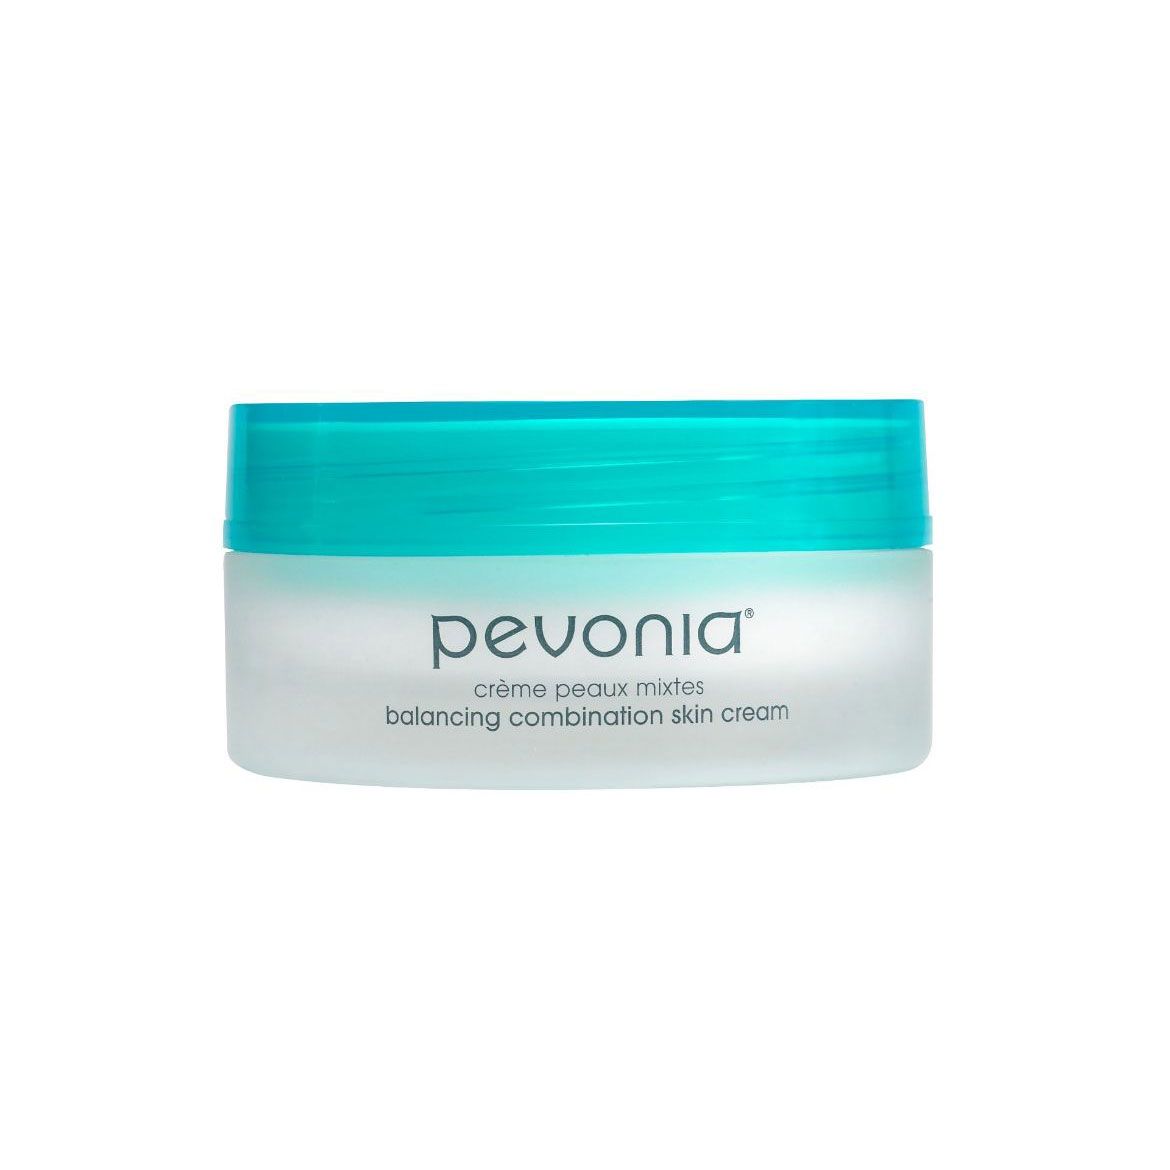 Bild von Pevonia Balancing Combination Skin Cream (50ml)